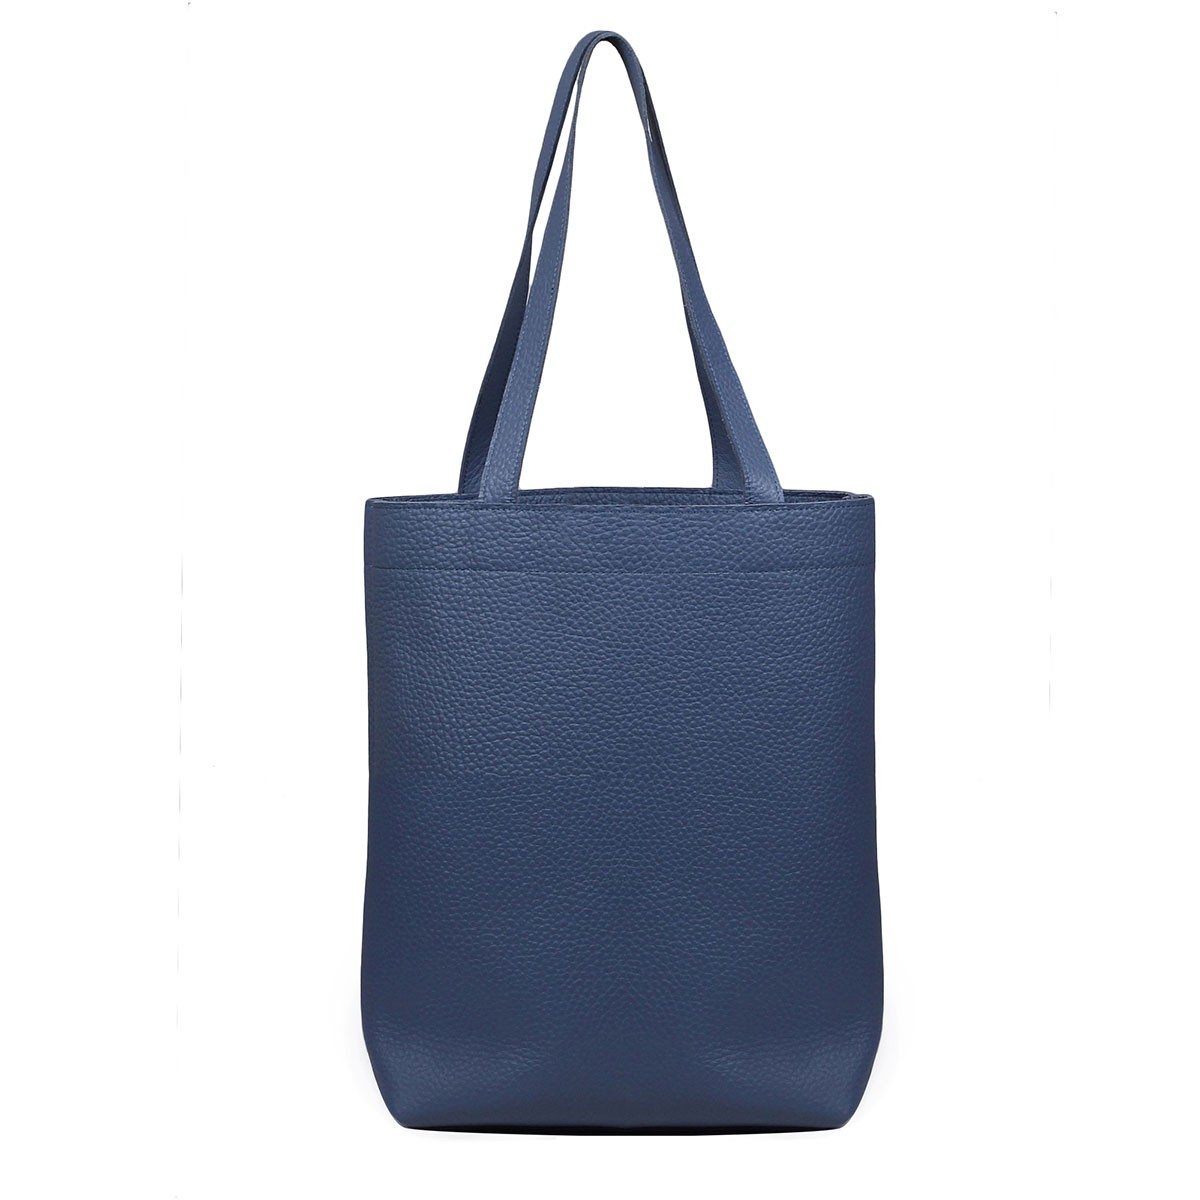 niebieska torebka damska skórzana shopperka  Chiara